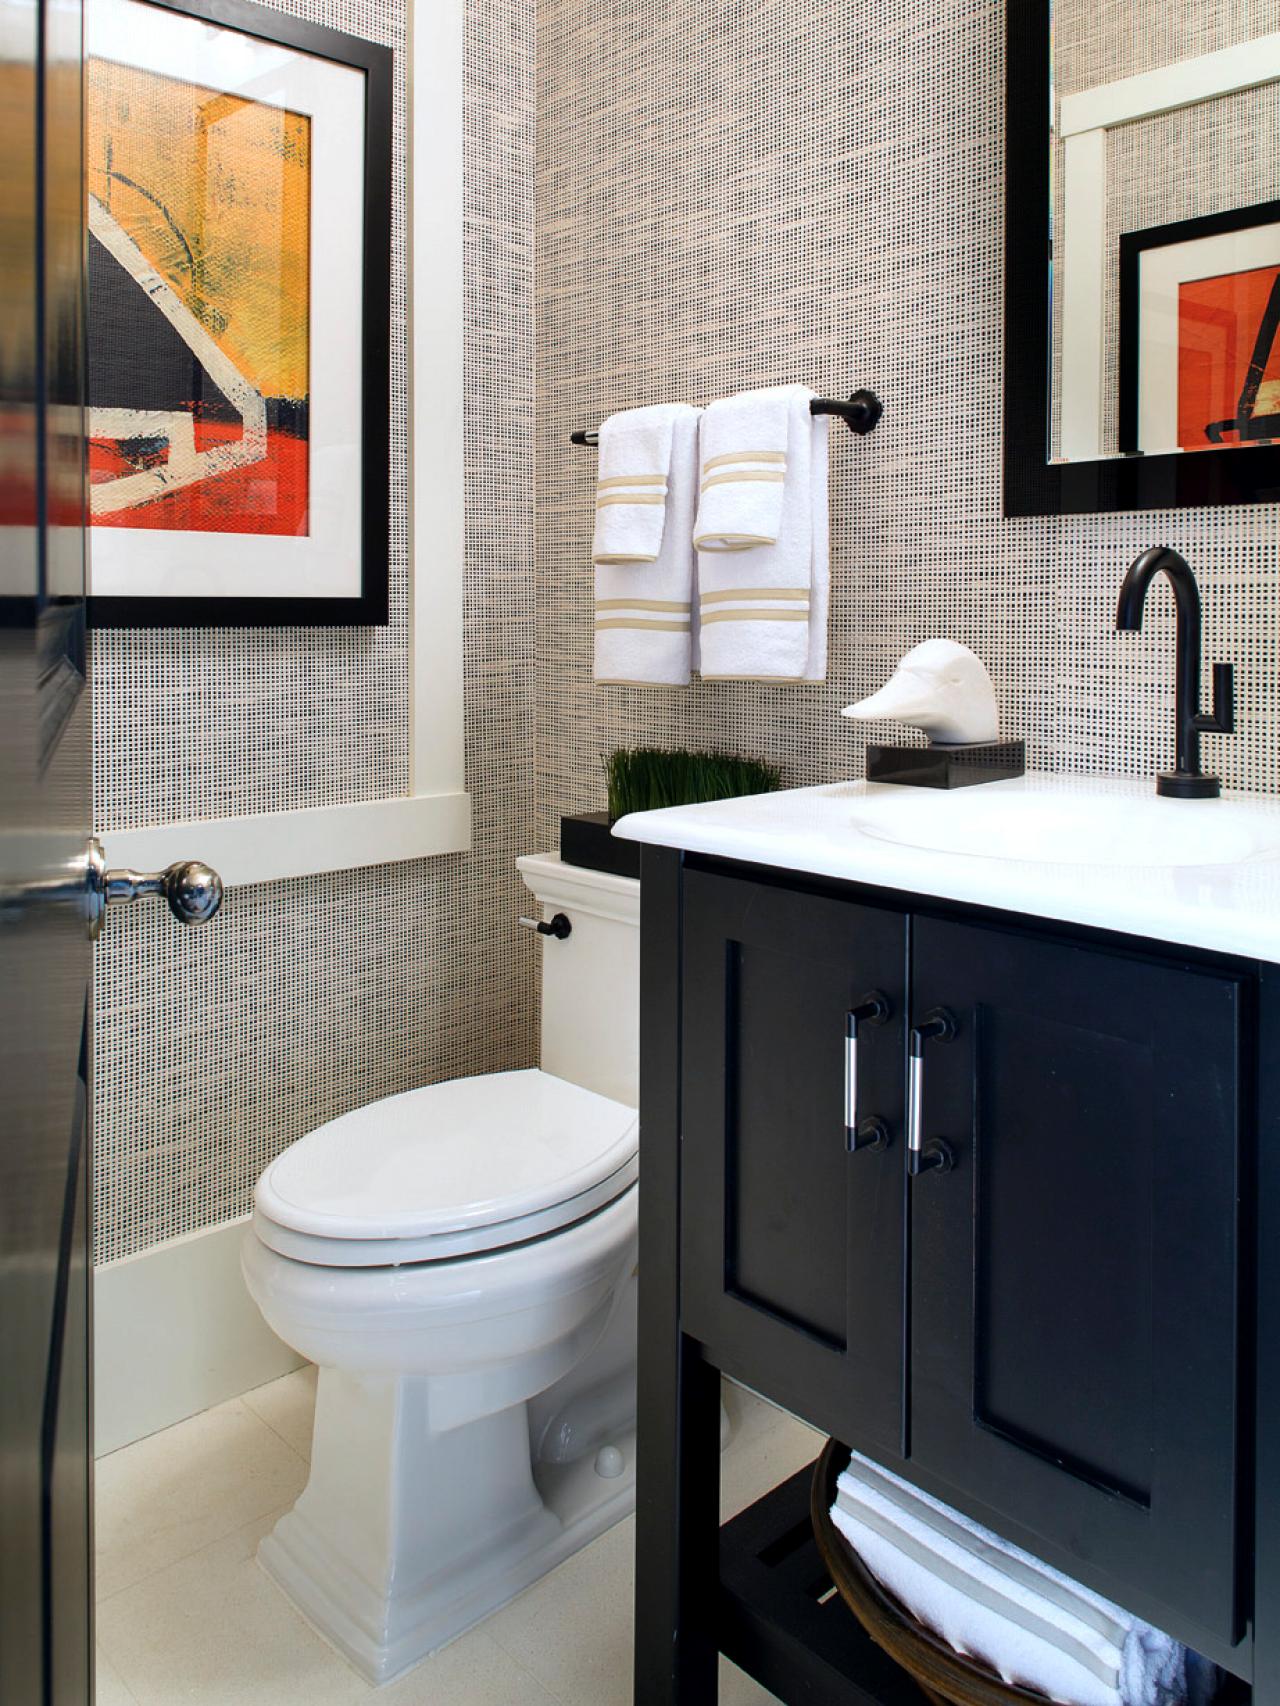 15 beautiful reasons to wallpaper your bathroom | hgtv's